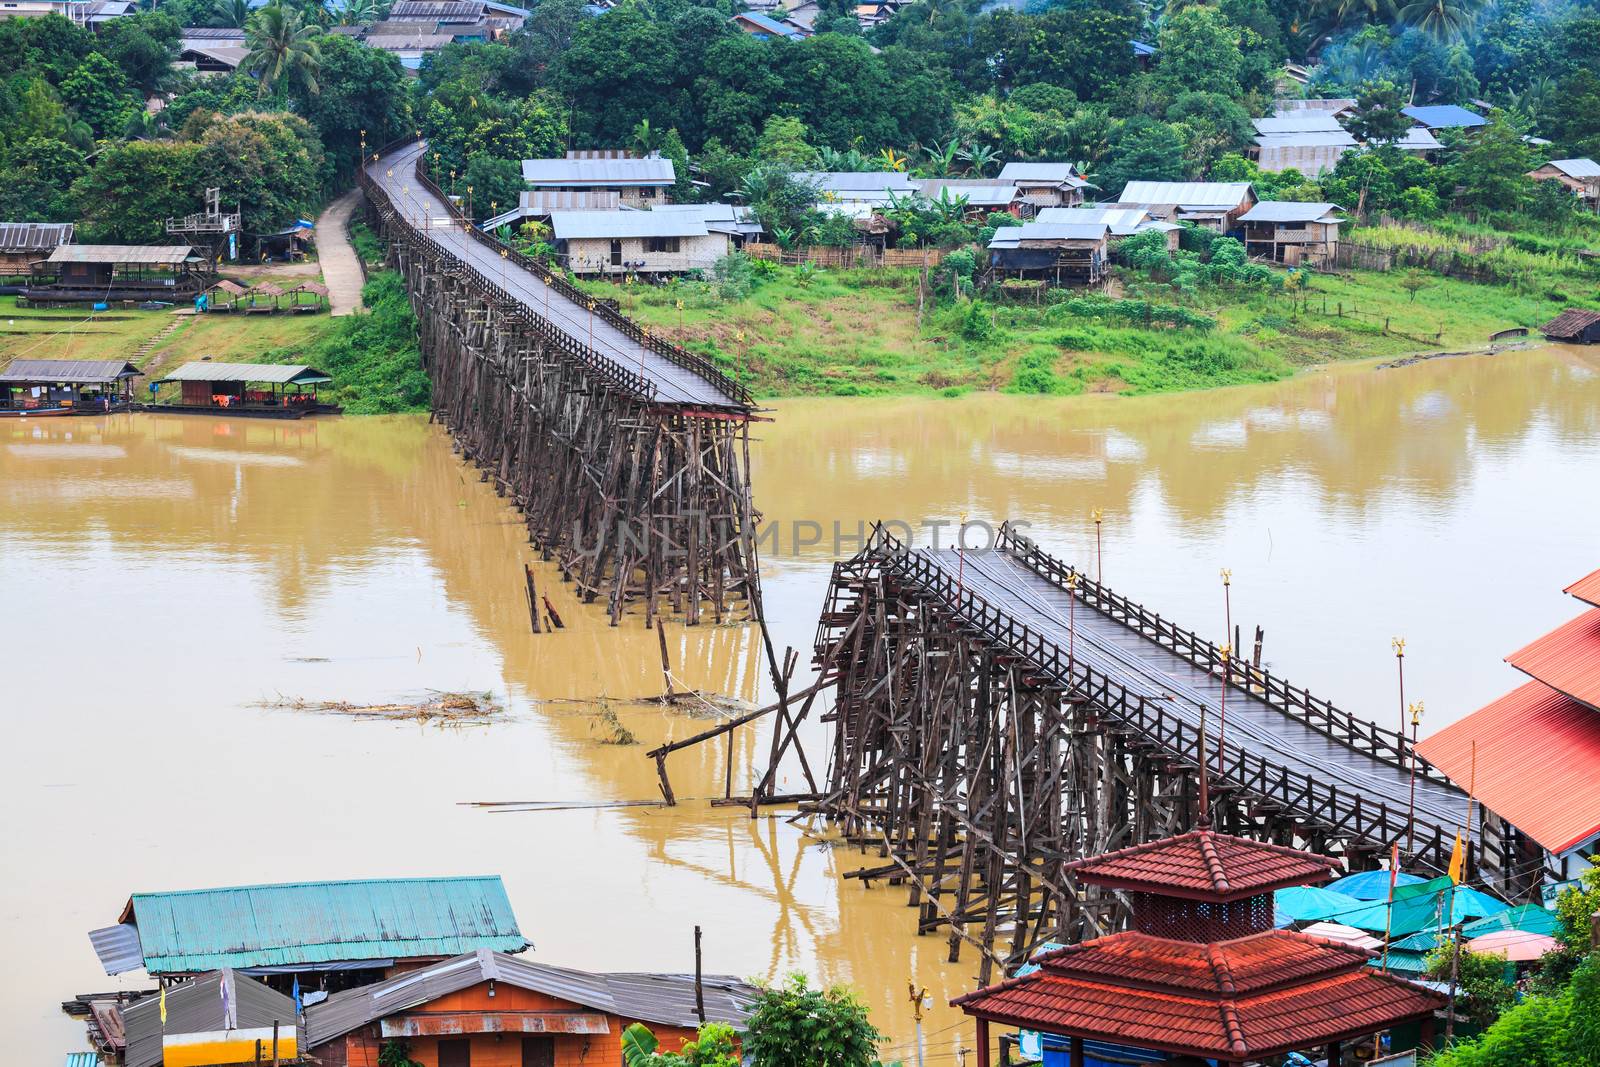 Famous wooden mon bridge in kanchanaburi collapsed during the flash floods